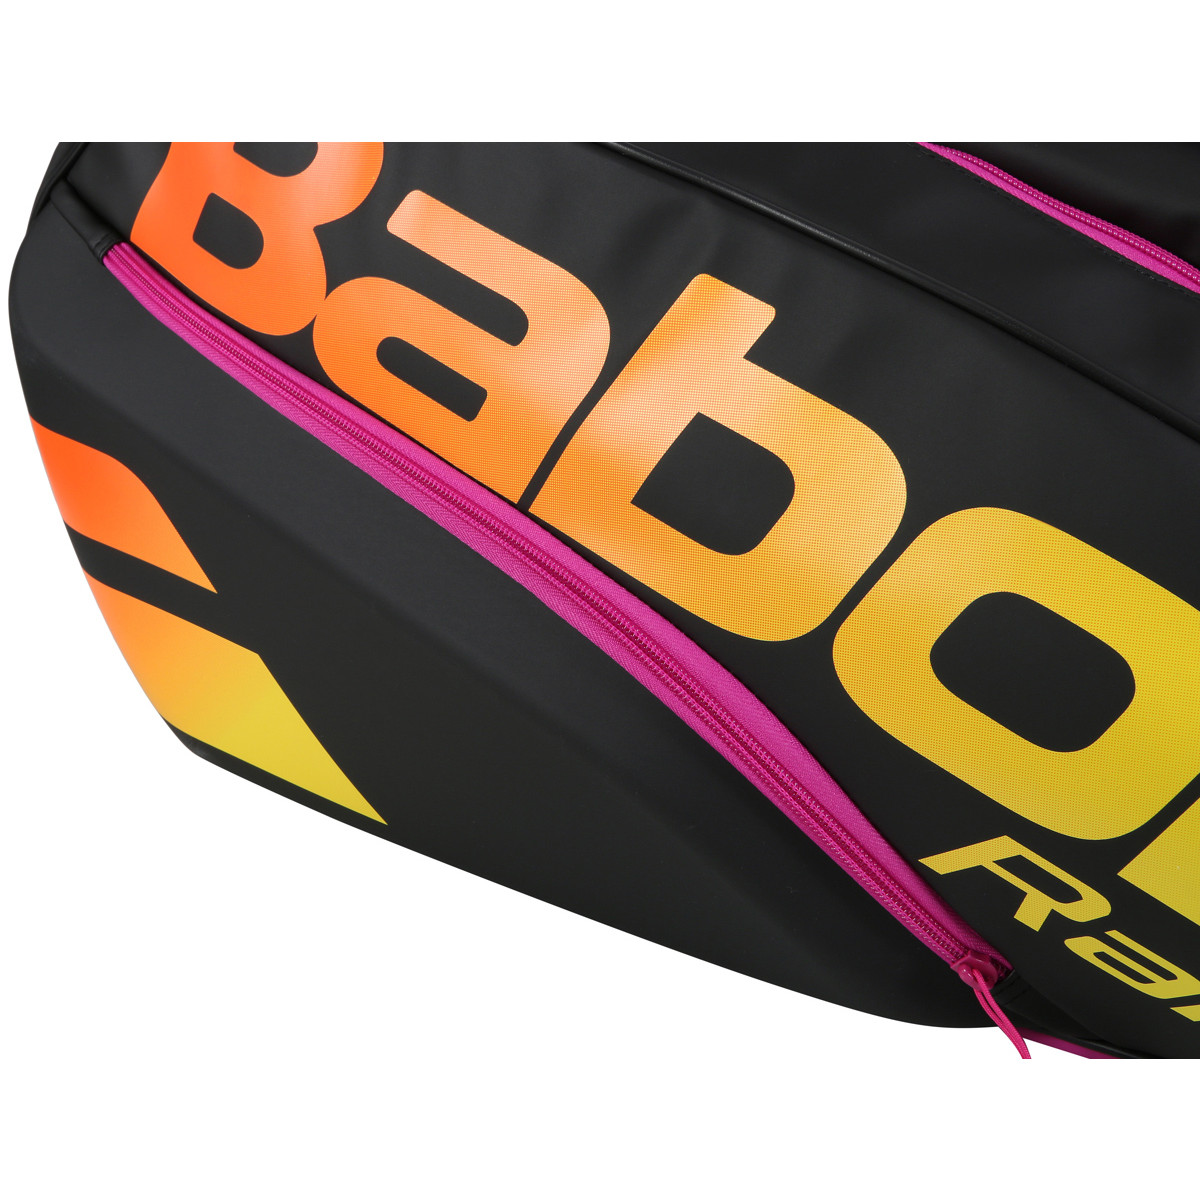 Babolat Pure Aero Rafa 12 Pack Bag